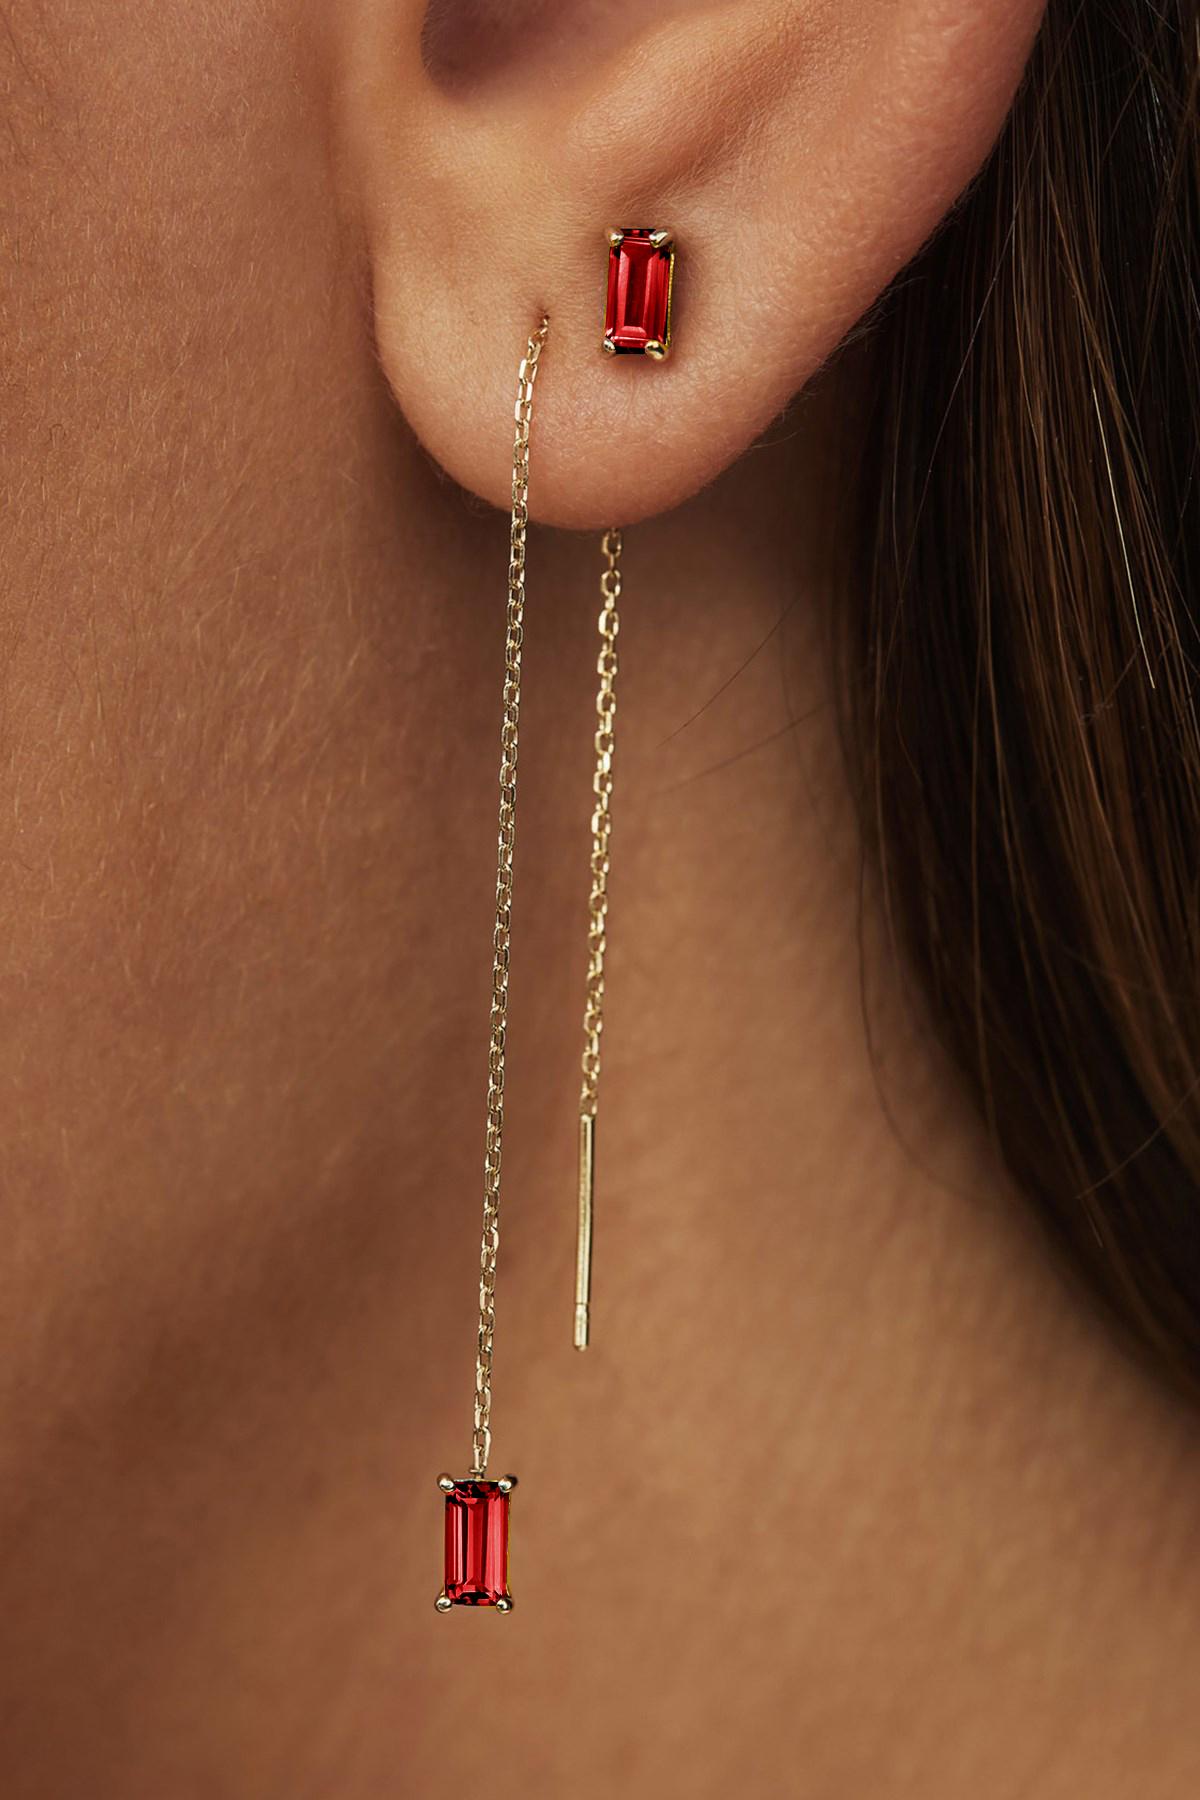 Women's 14k solid gold drop earrings with garnets.  For Sale